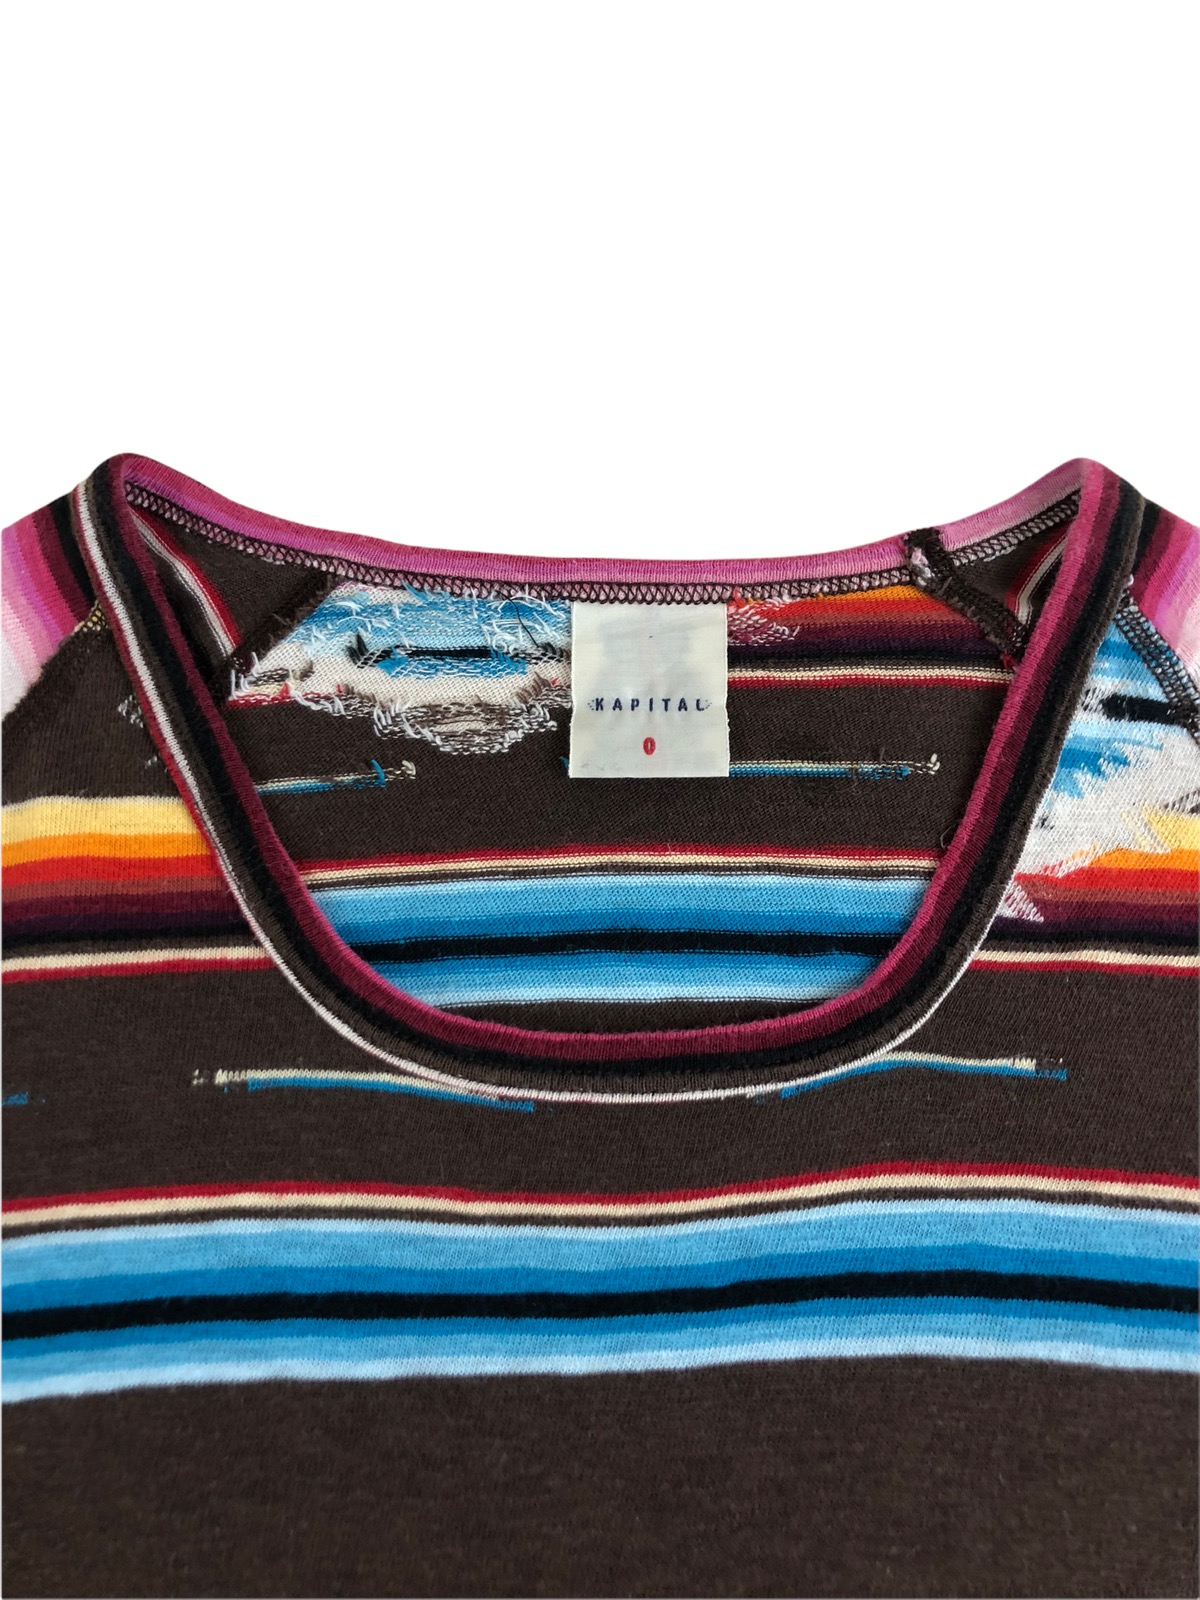 Vintage Kapital Aztec motif Cotton Knit Tshirt - 6